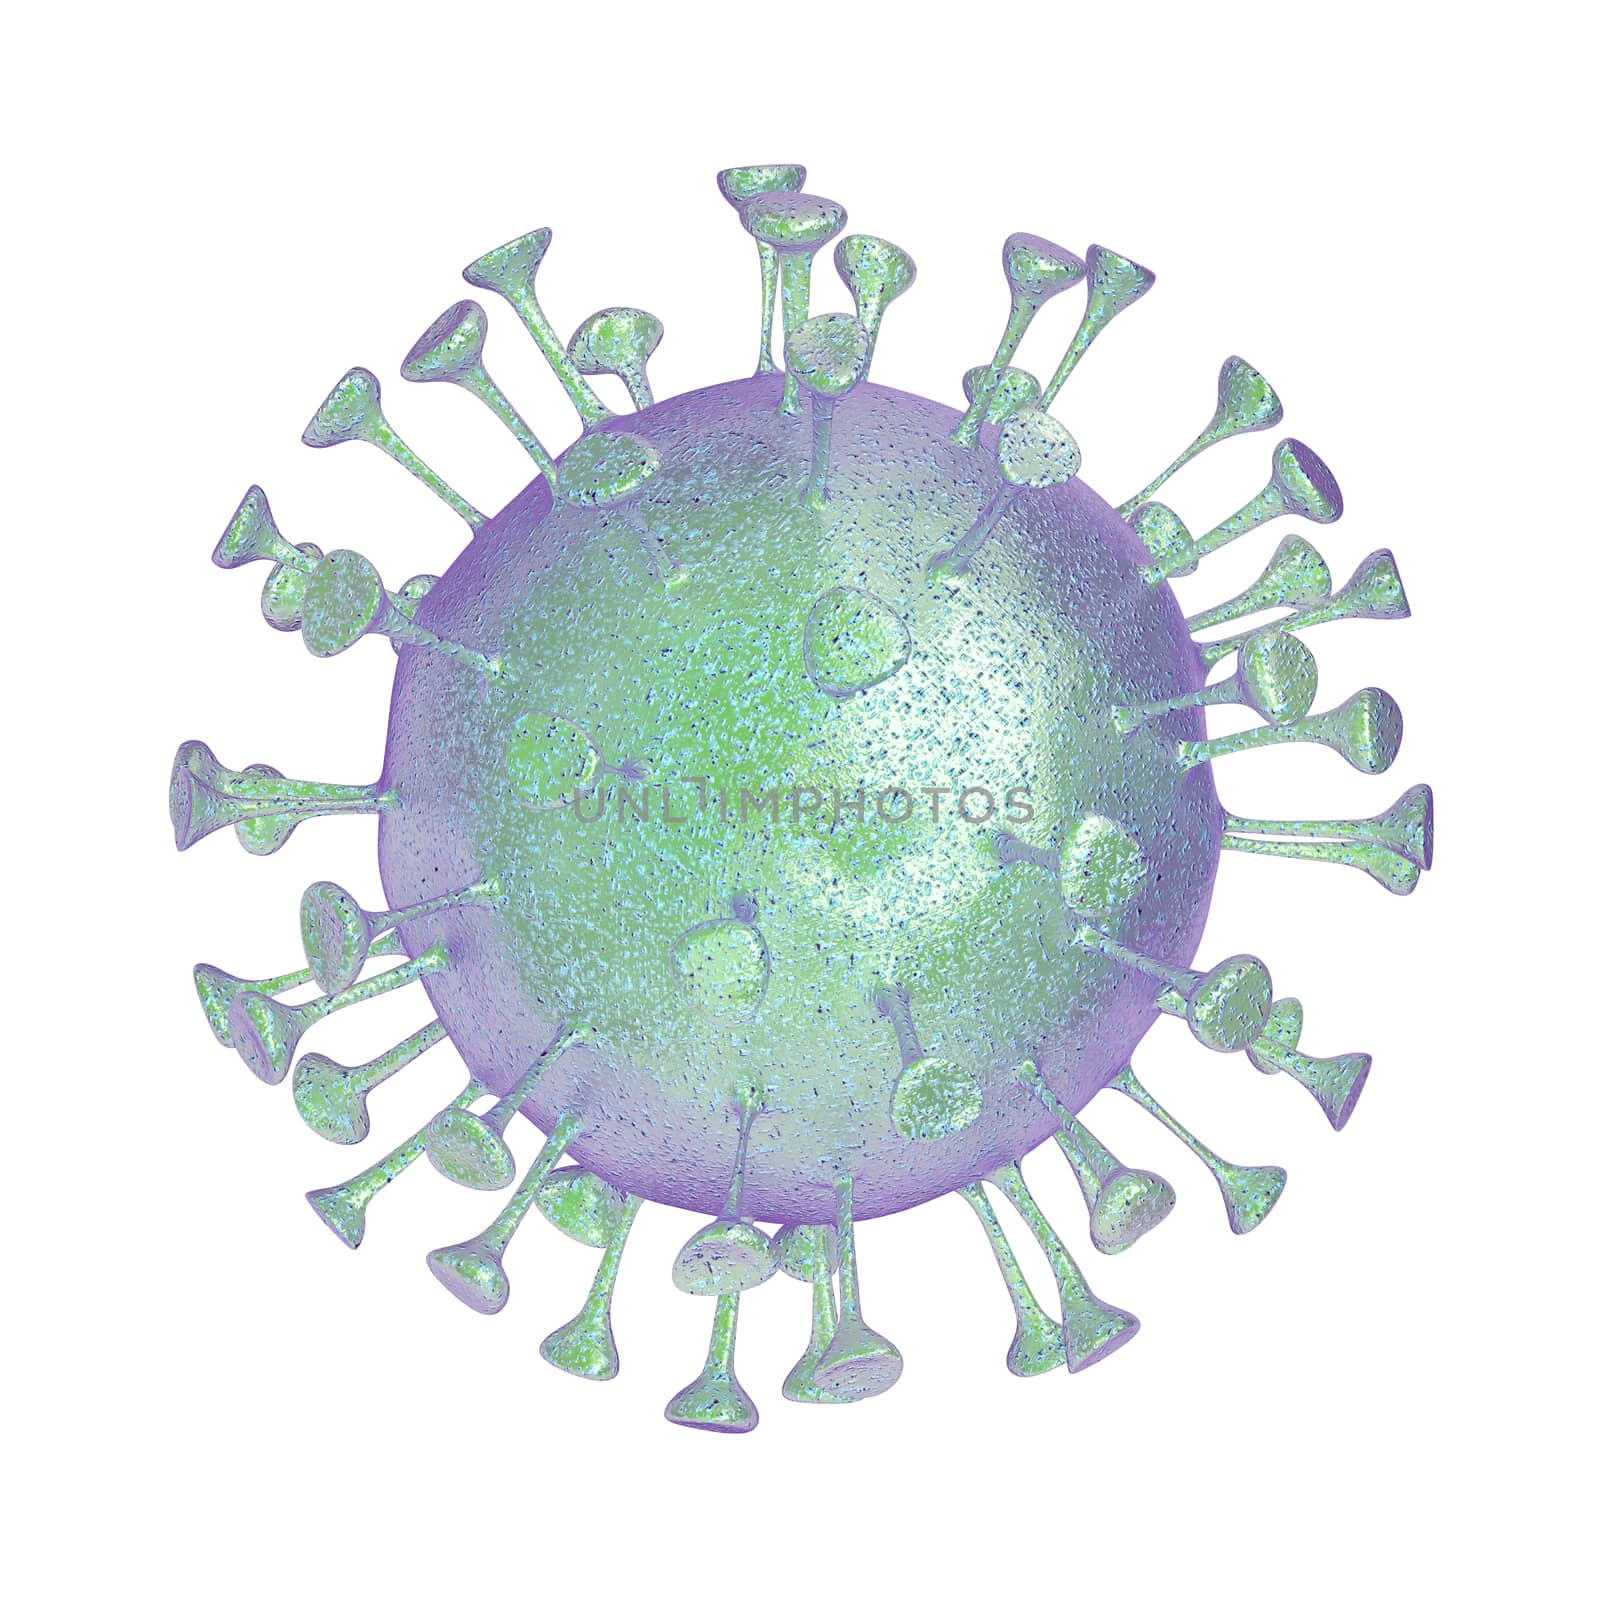 Coronavirus isolated on white by magraphics